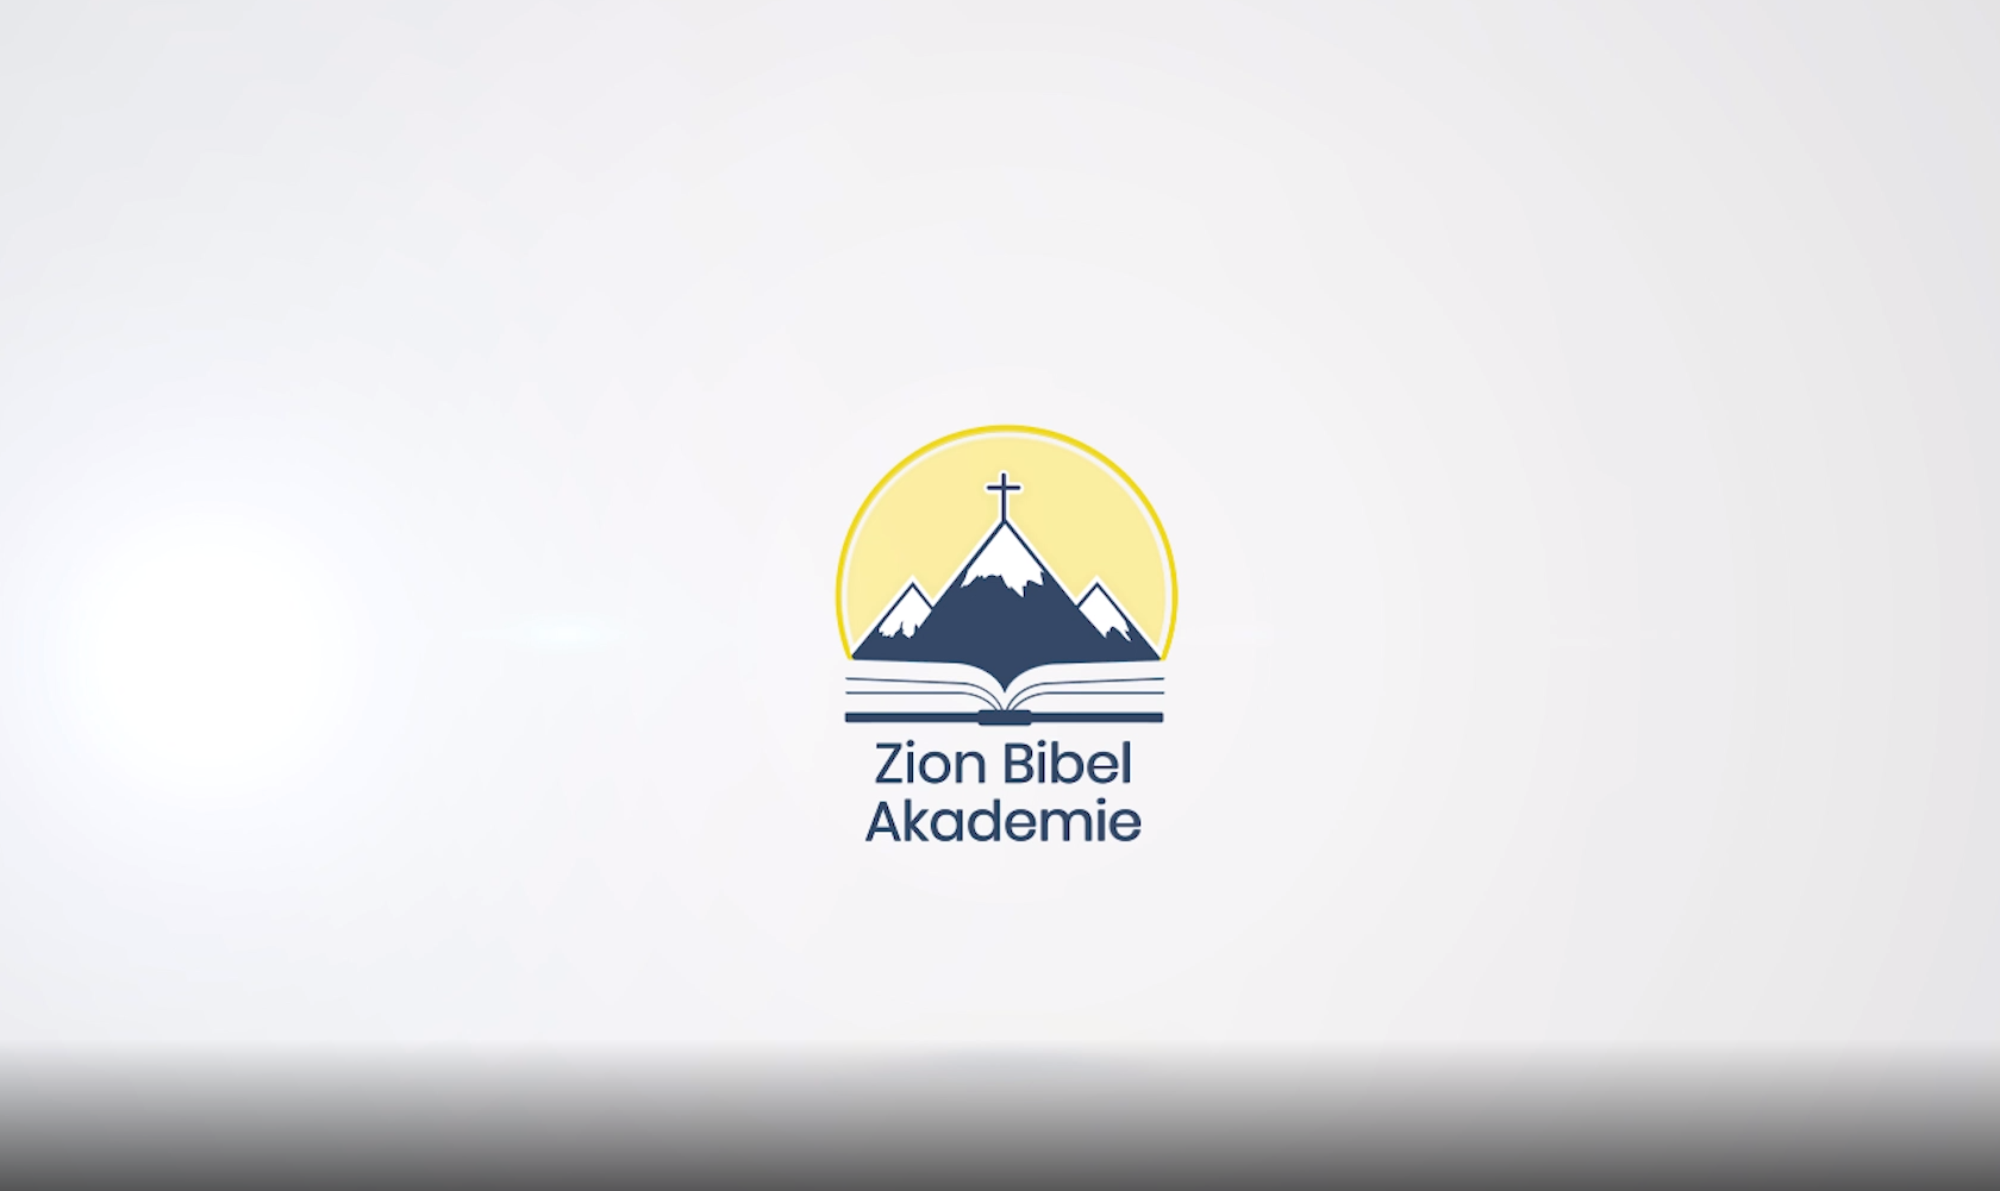 Zion Bibel Akademie